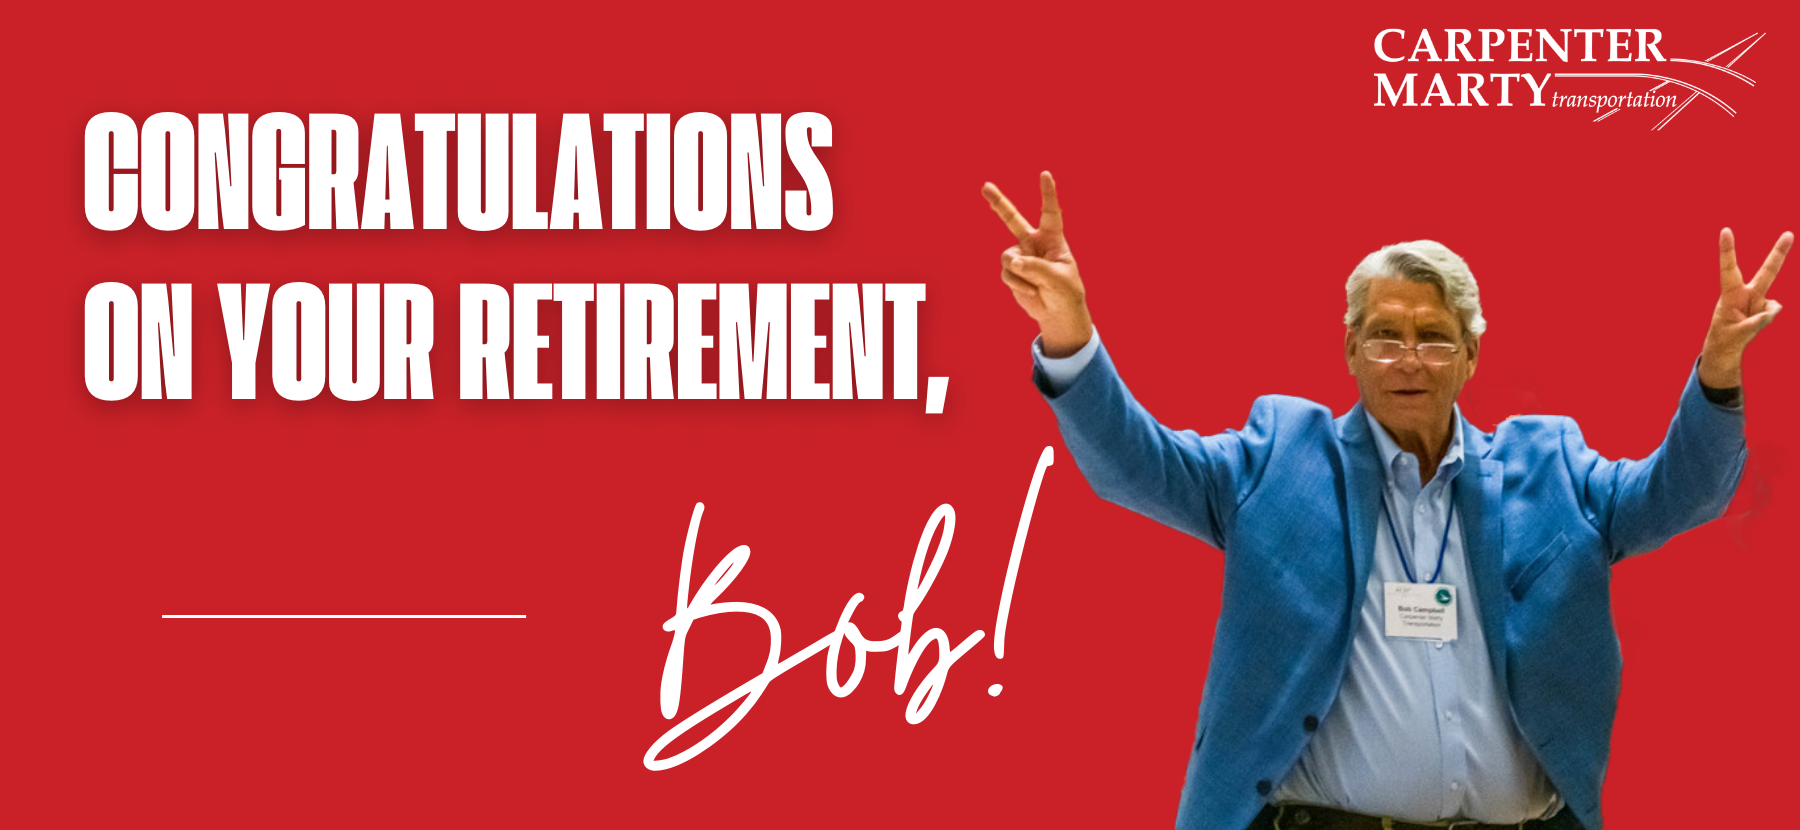 A Carpenter Marty Farewell: Celebrating Bob’s Retirement